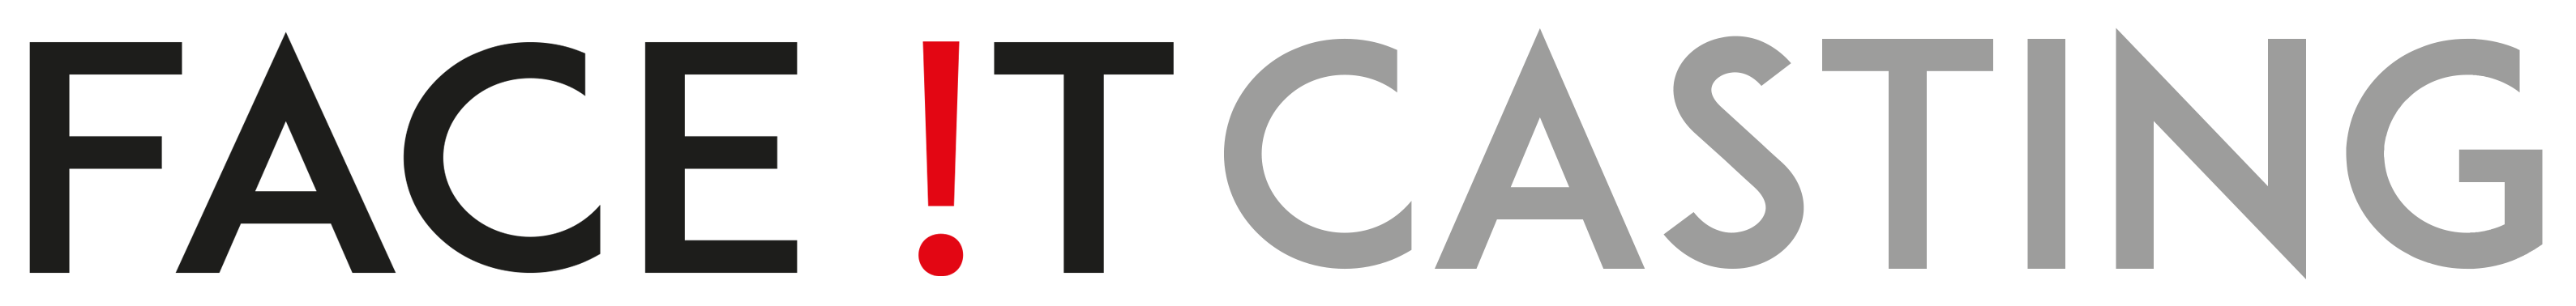 Face It Casting Logo